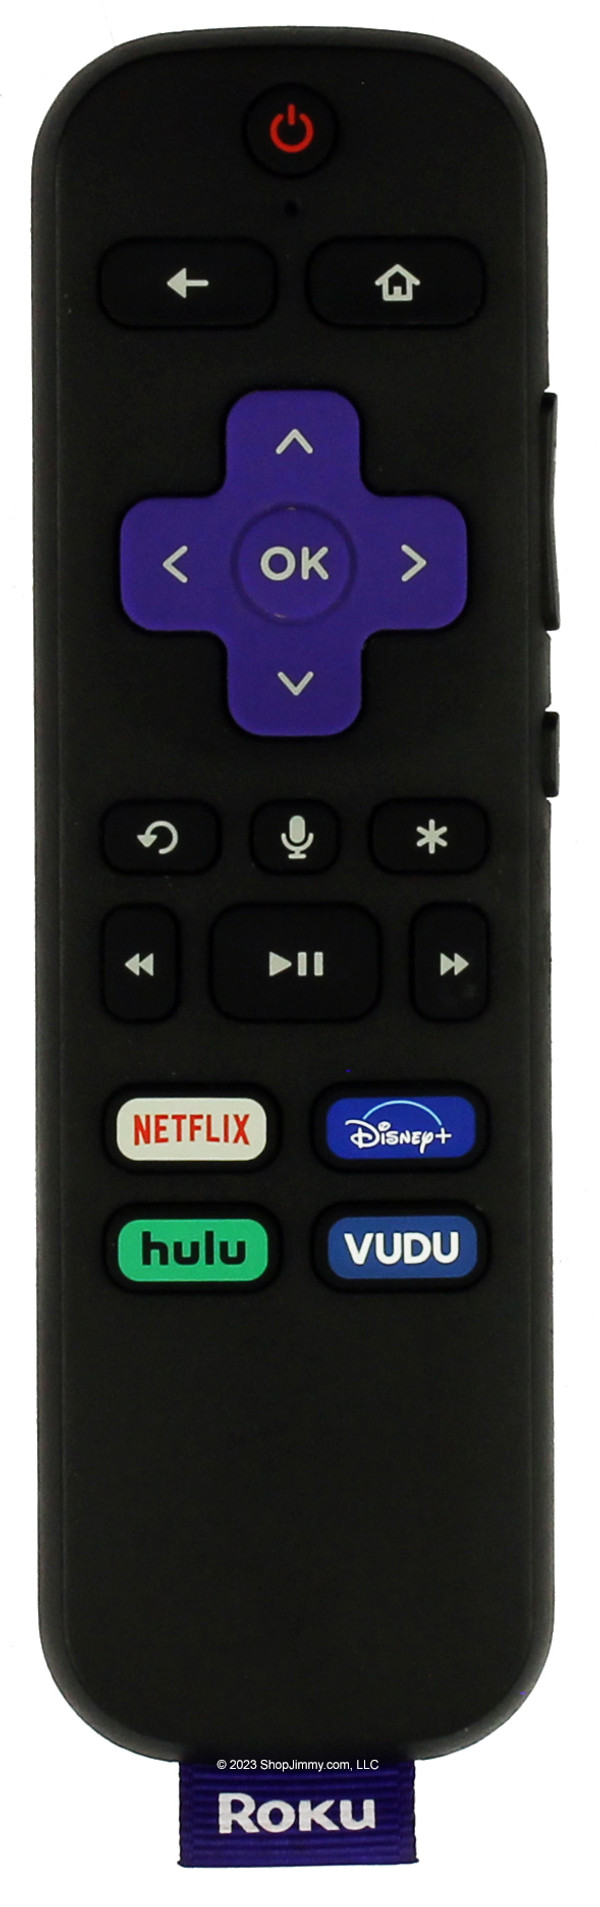 Roku 3226000840 Remote Control Netflix, Disney, Hulu, Vudu -- Open Bag